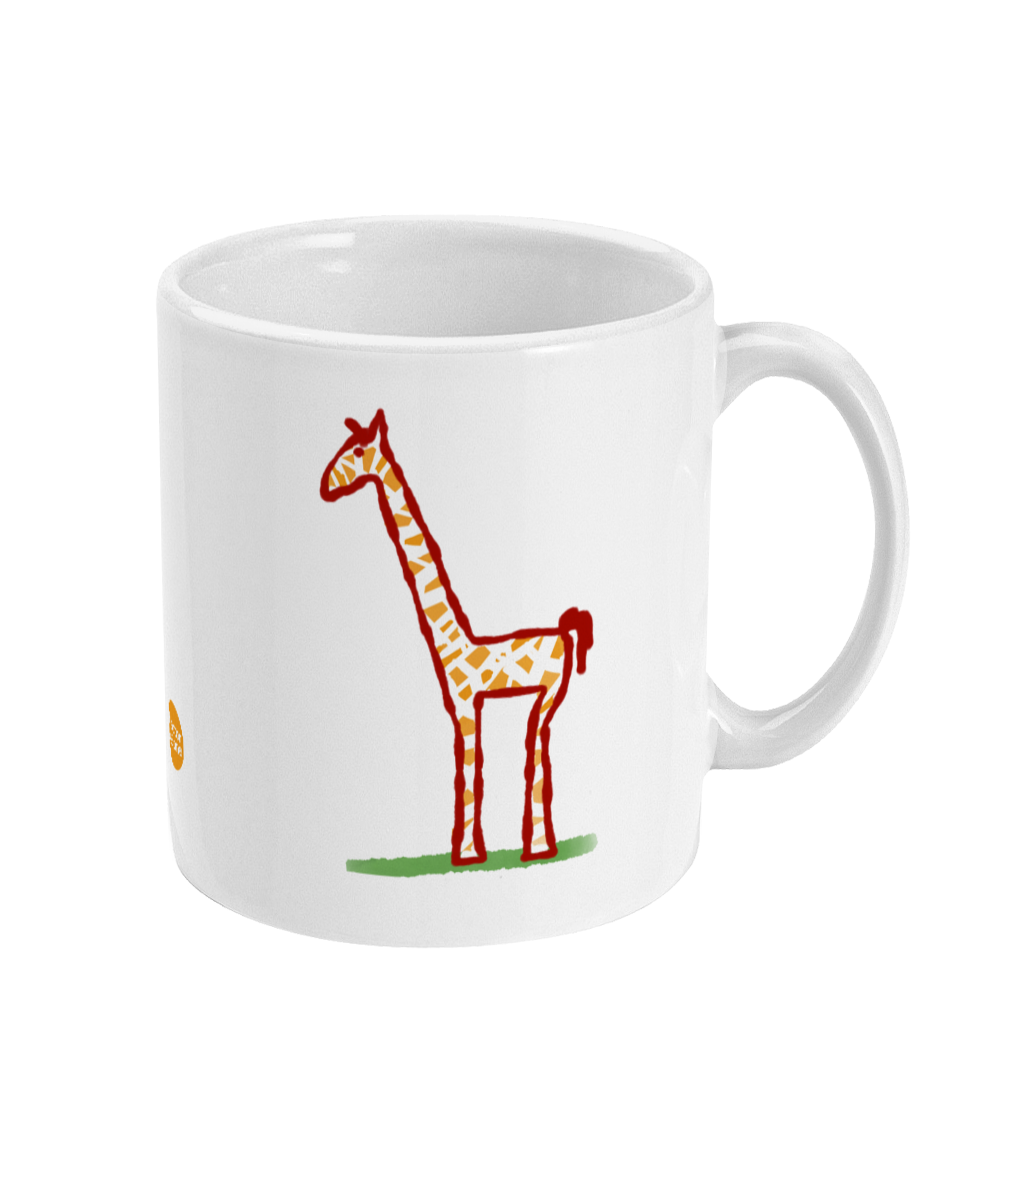 Cute Giraffe mug - Illustrated Jeffrey Giraffe coffee mugs by Hector and bone  - Right view 